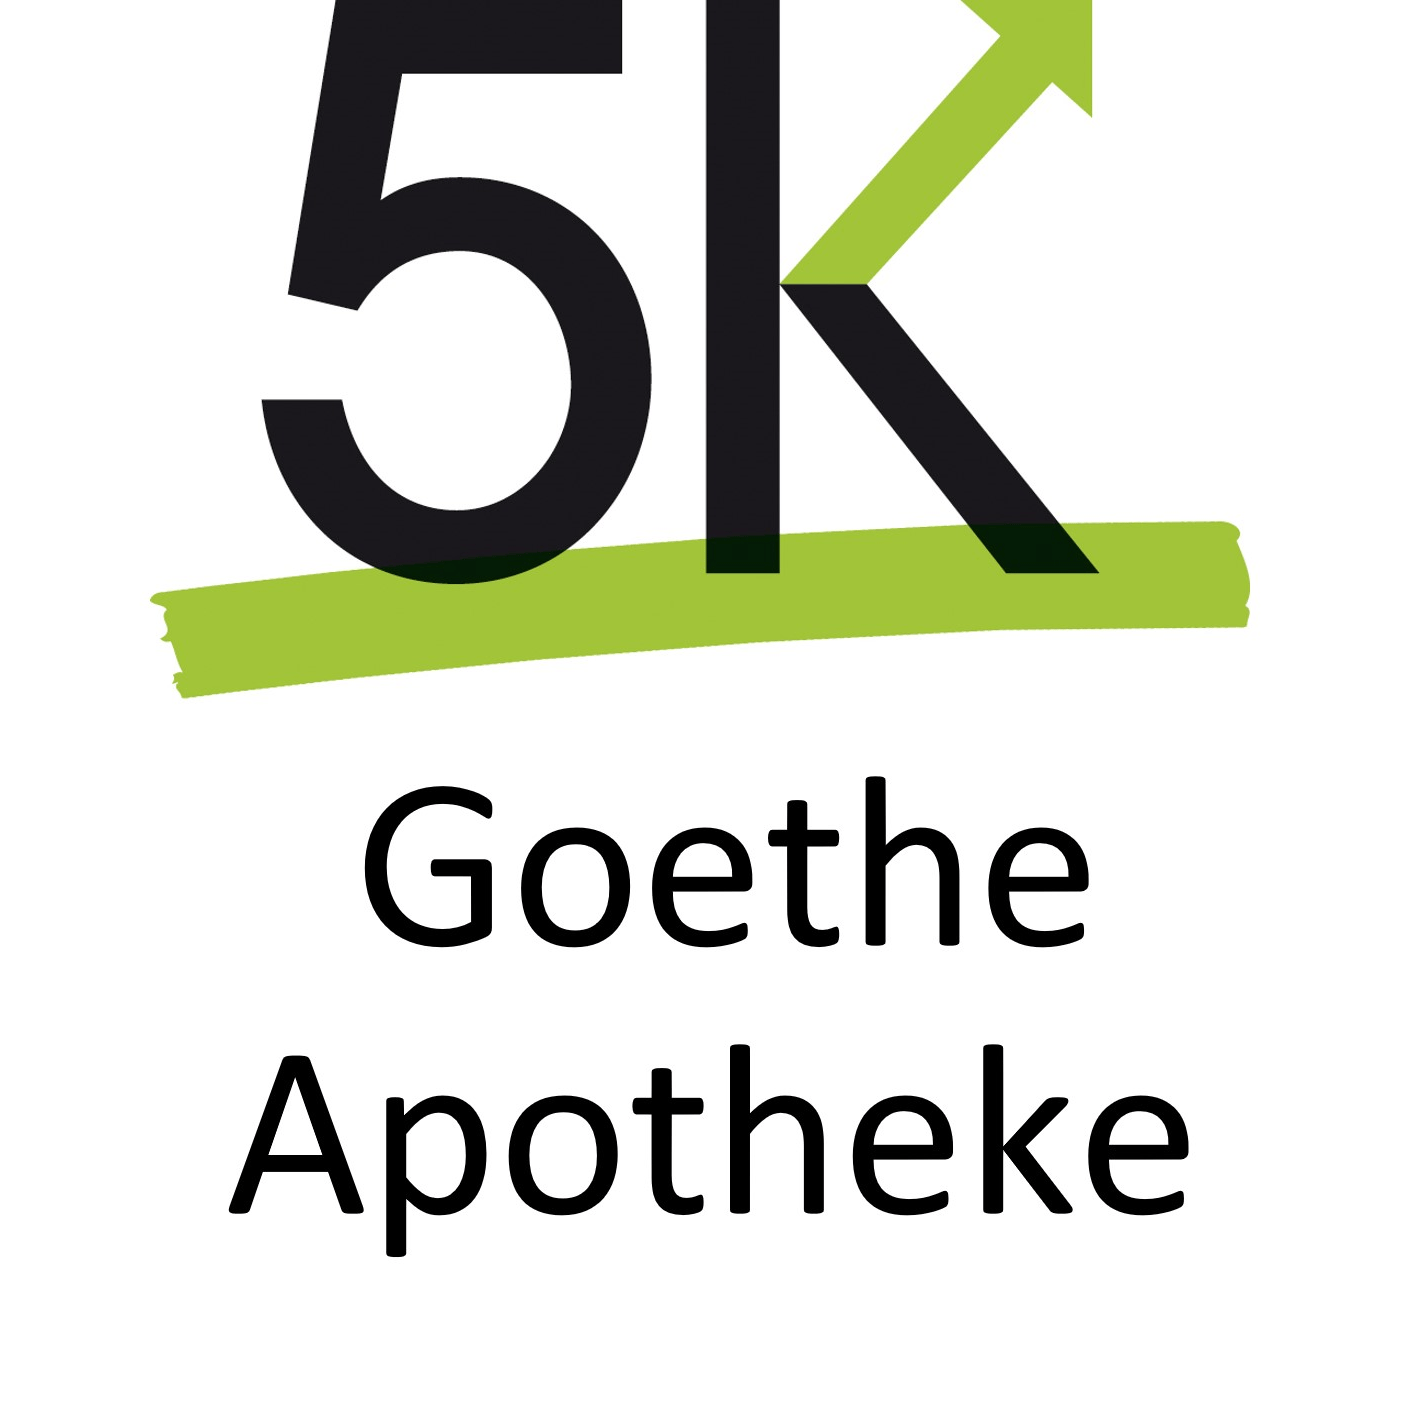 5K Goethe Apotheke  